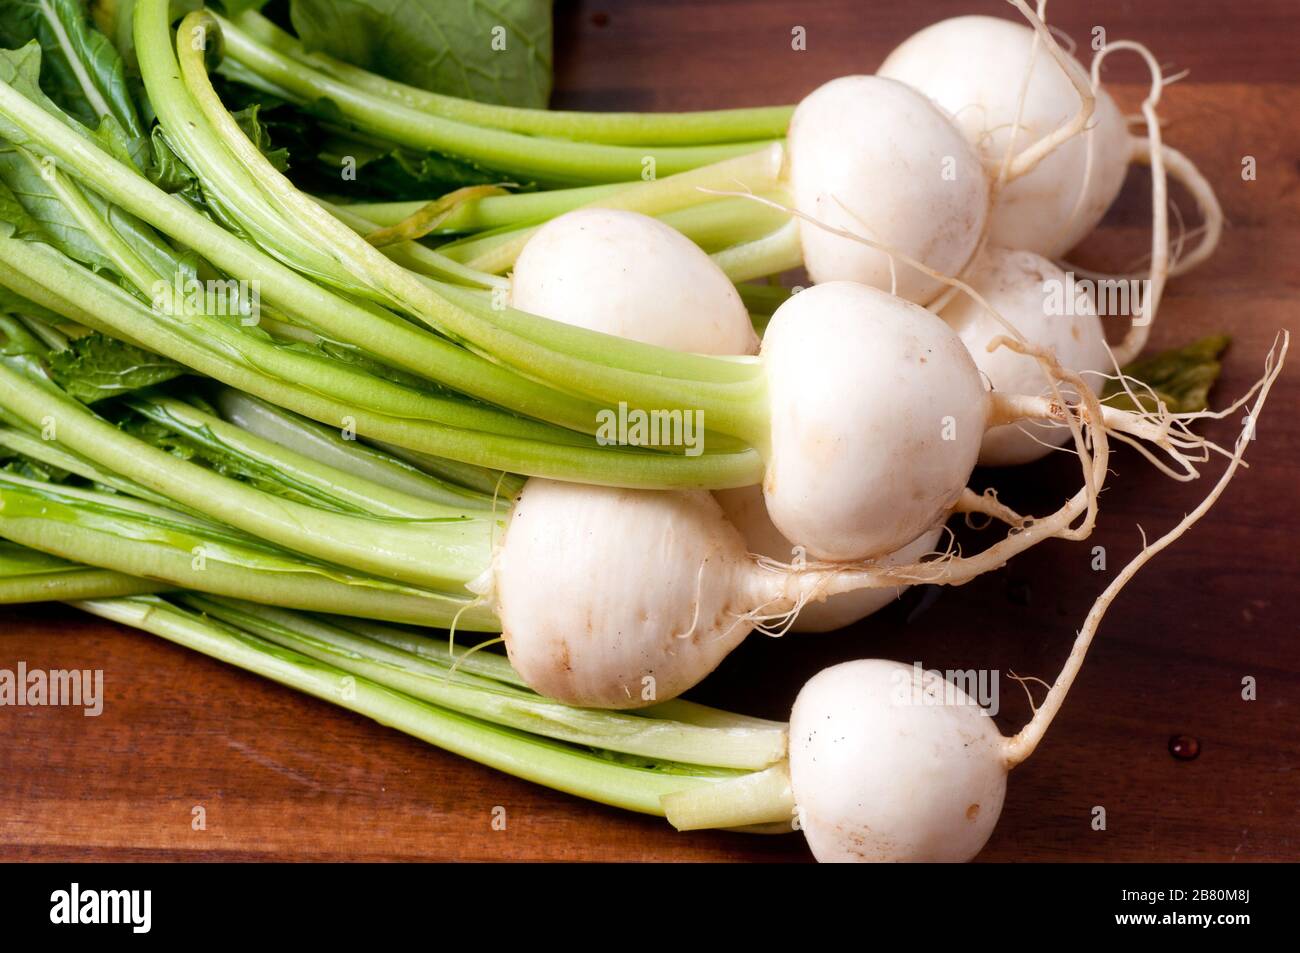 Closeup shot of white turnips on the table Stock Photo